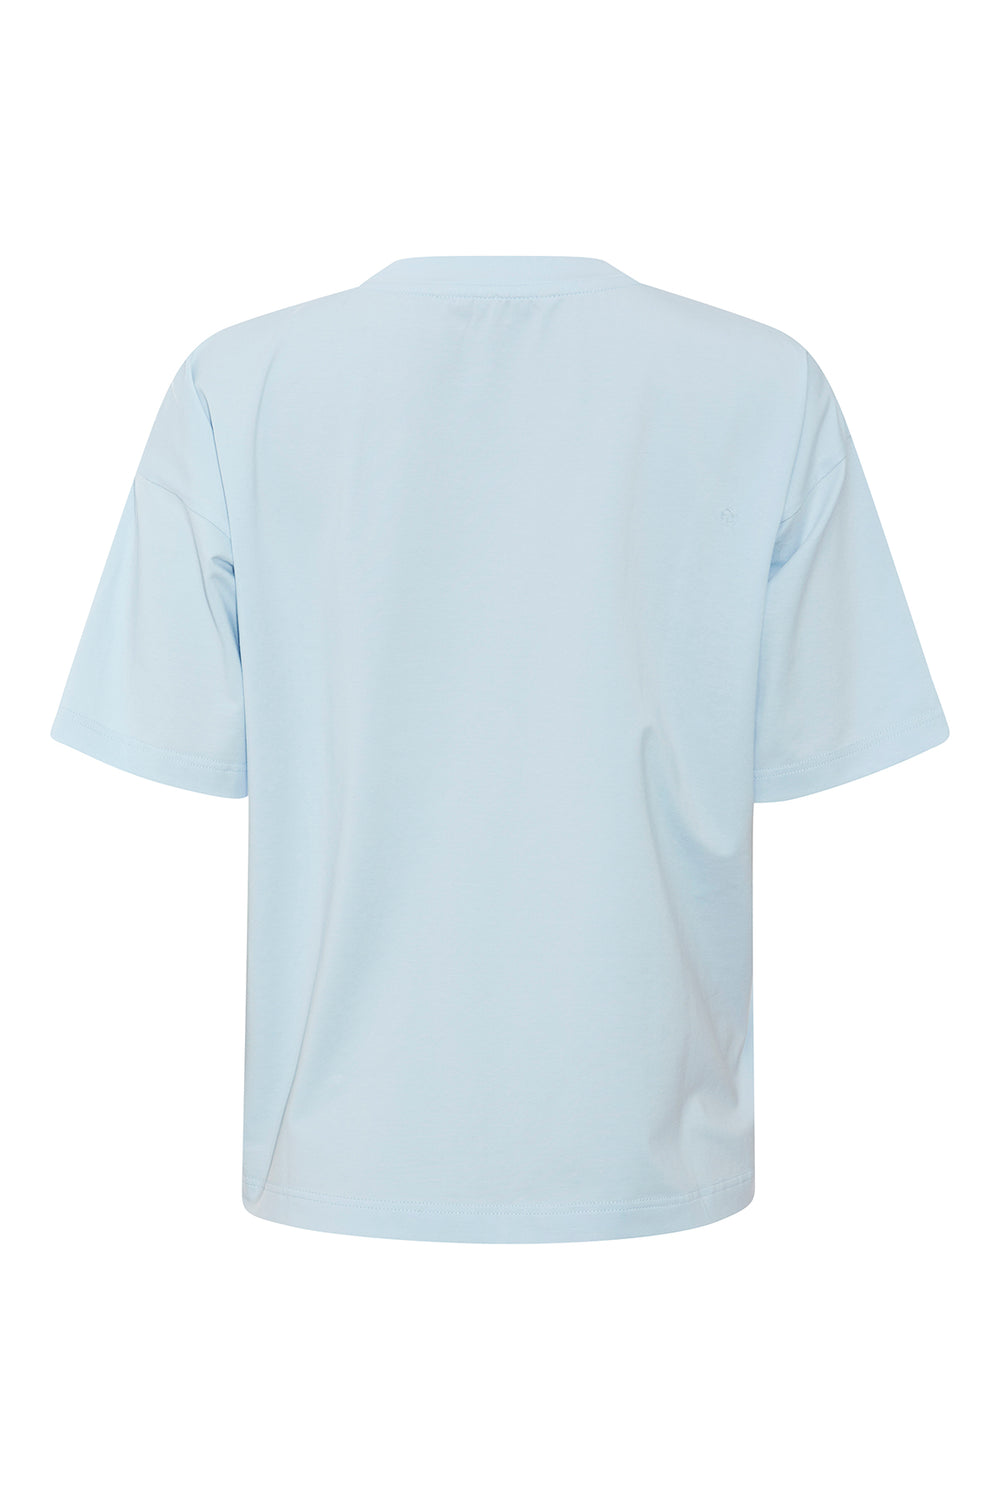 PBO Bravo T-shirt T-SHIRTS 213 Sky blue